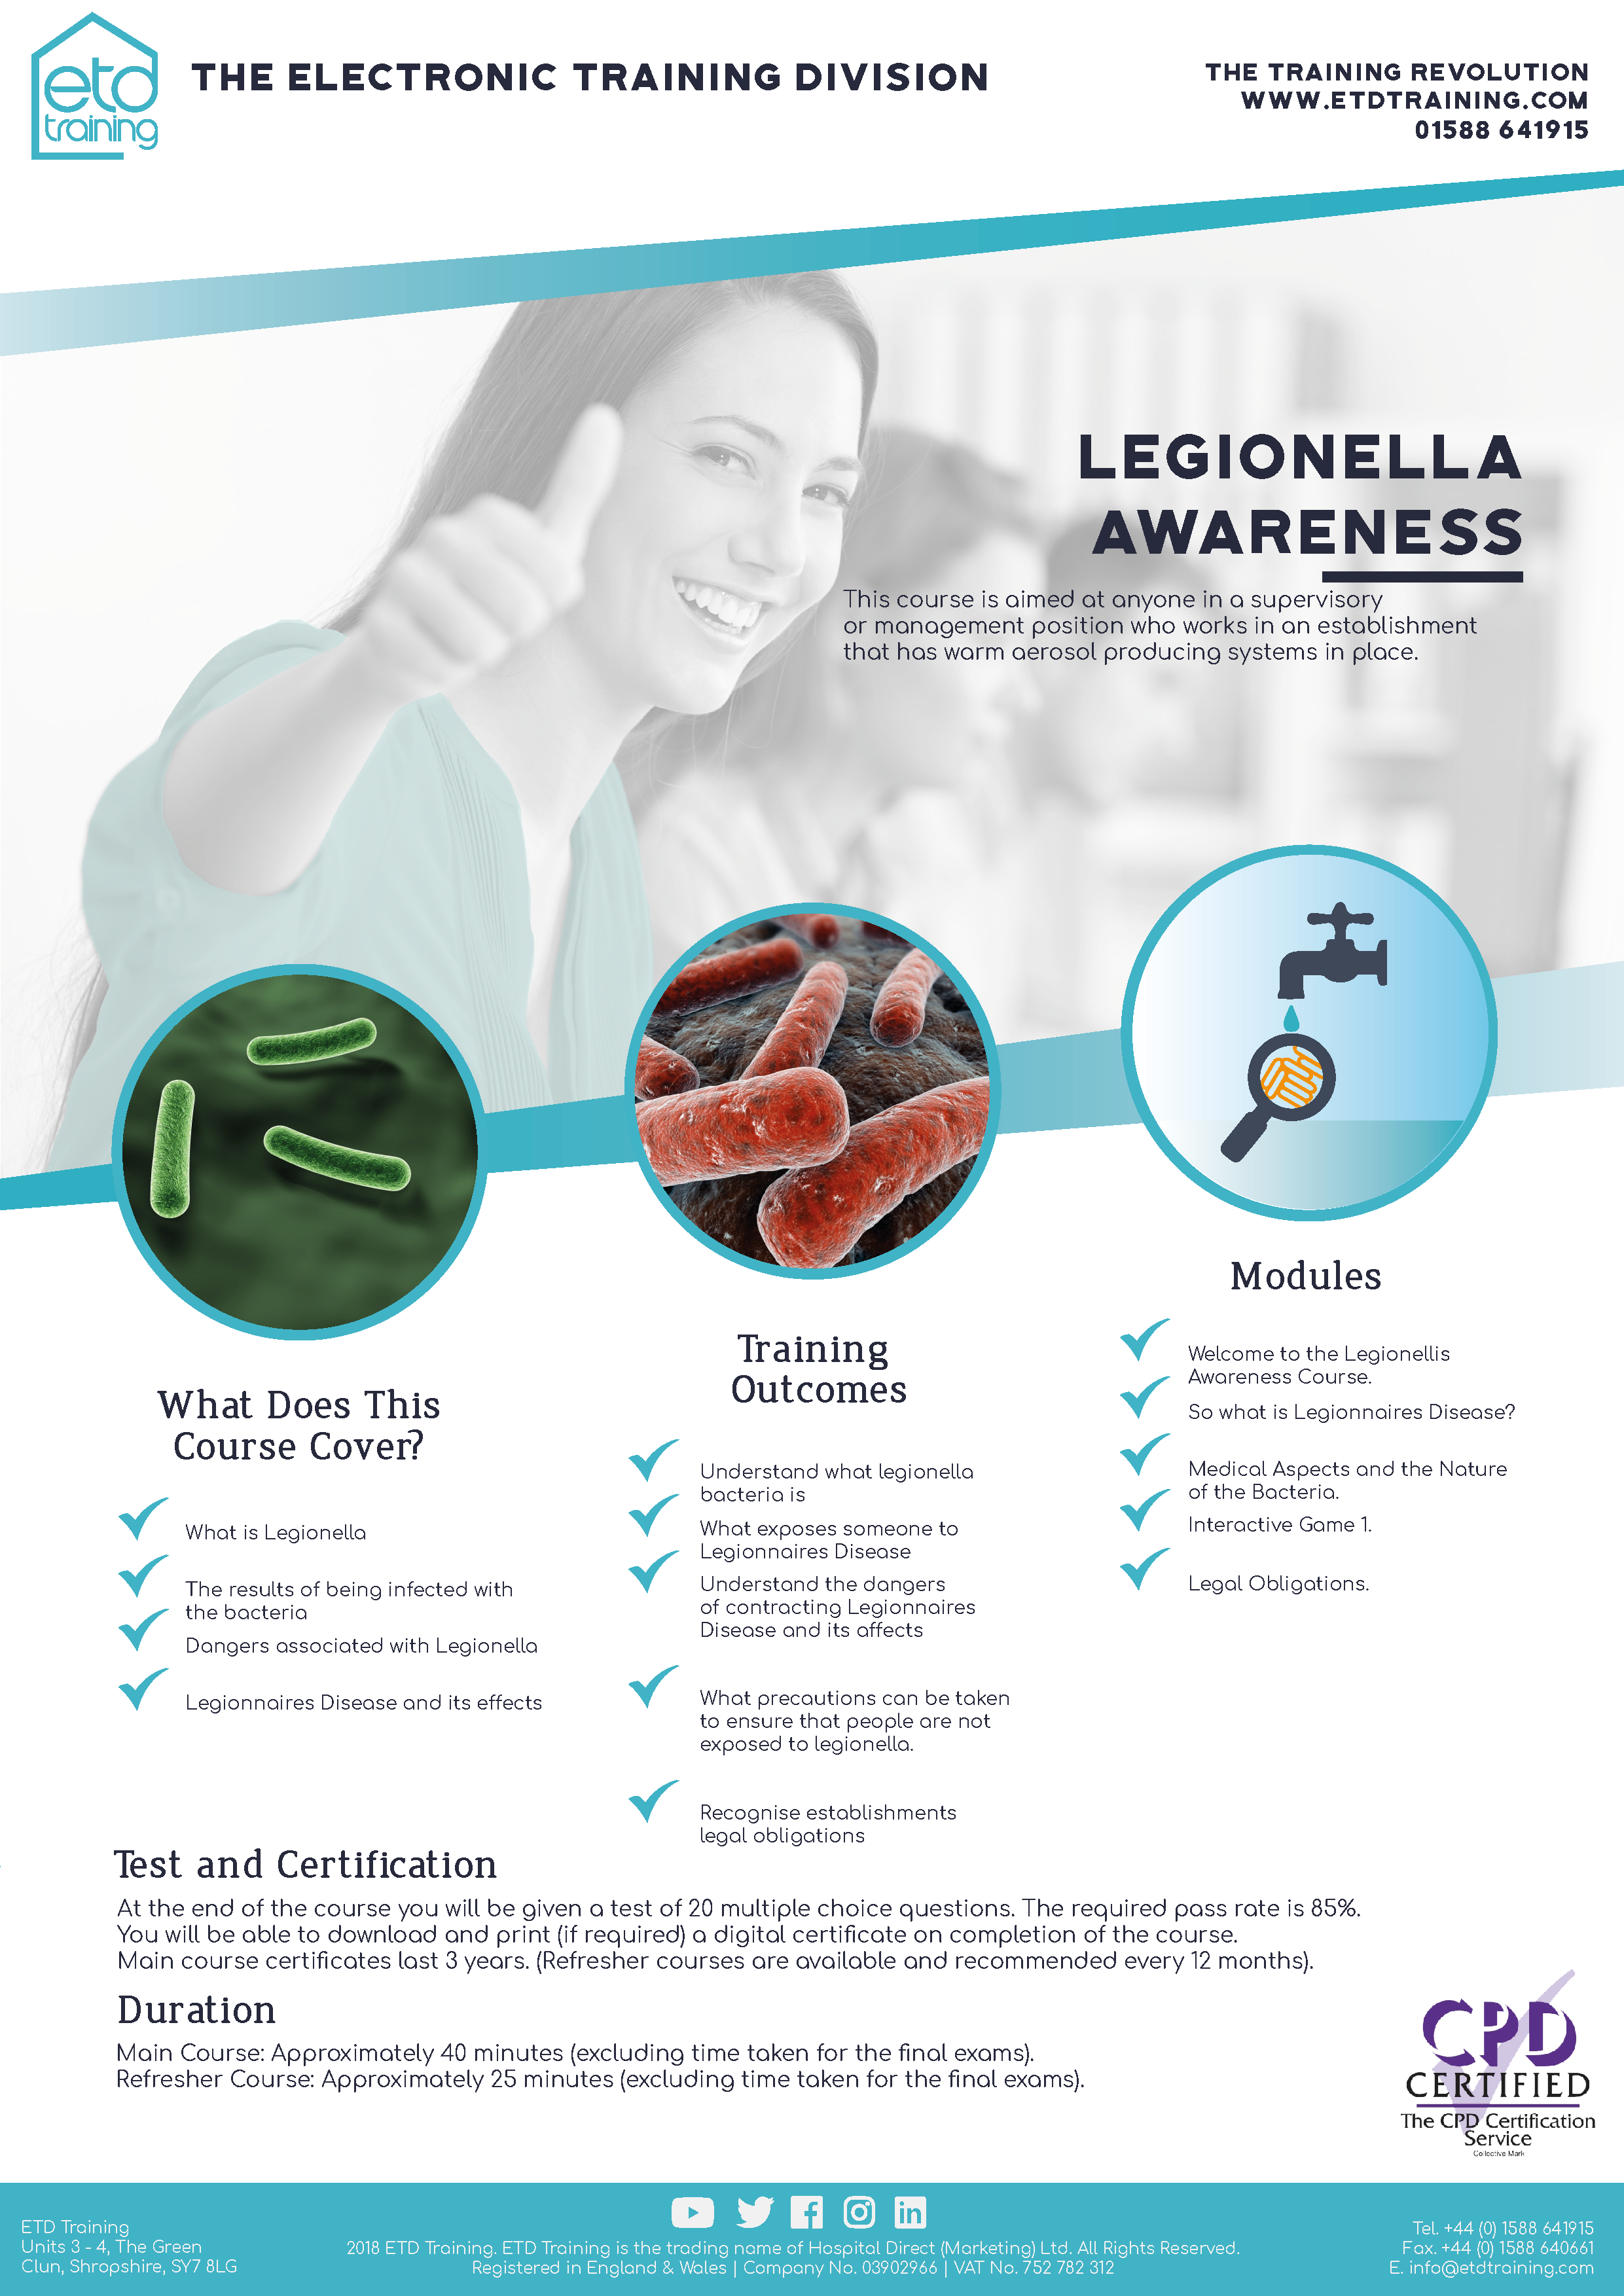 LegionellaAwareness.png